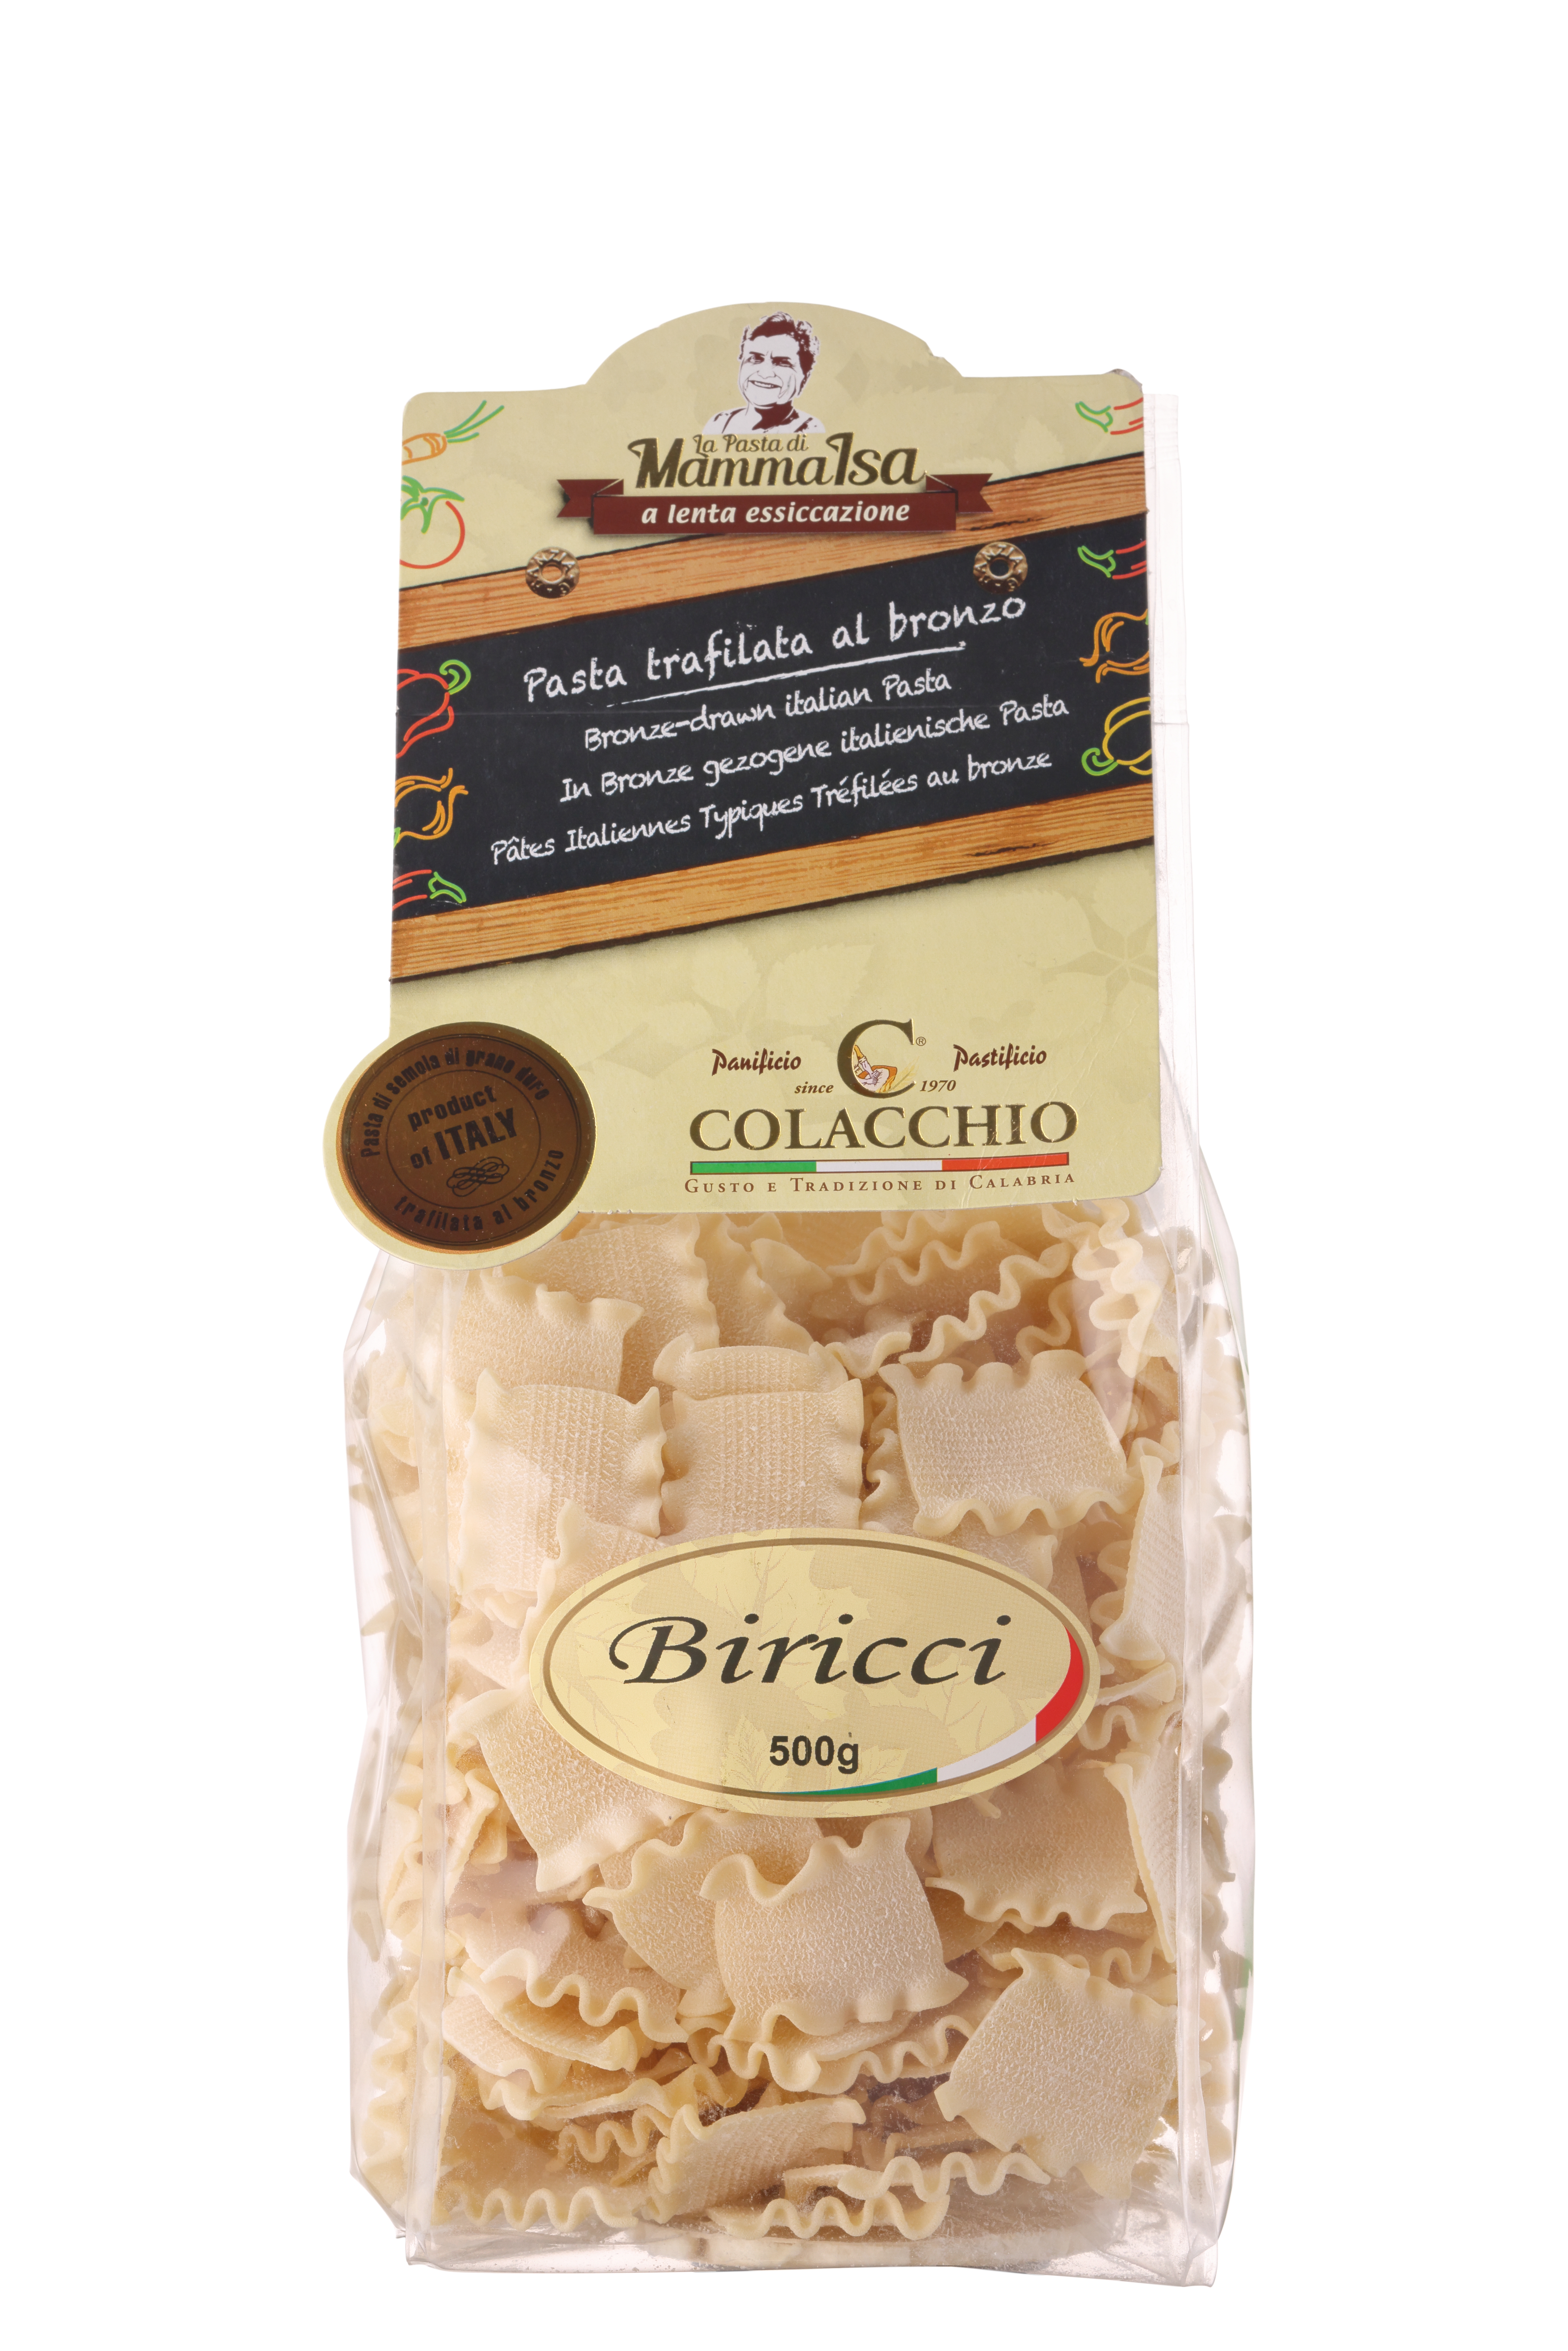 Colacchio, kurze Nudeln "Biricci", 500g